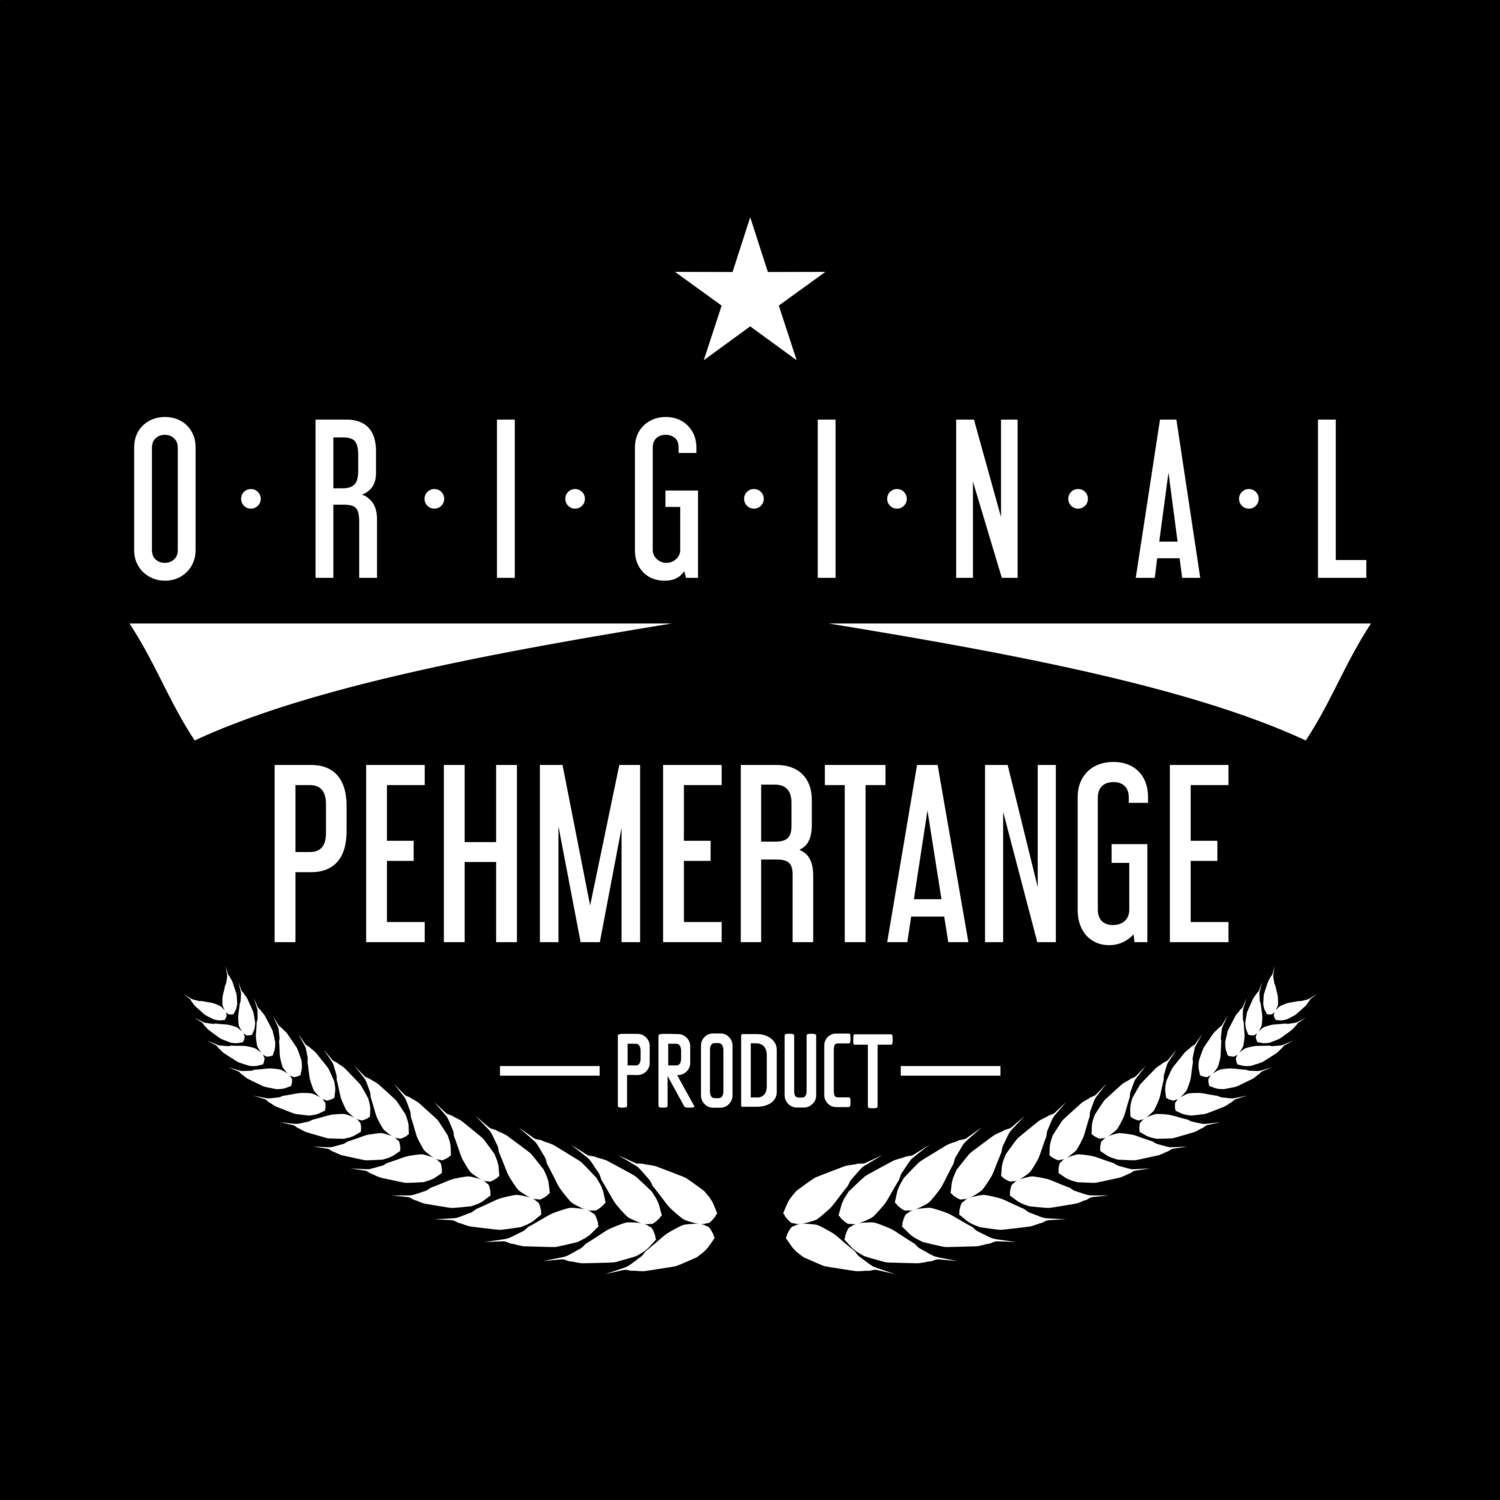 Pehmertange T-Shirt »Original Product«